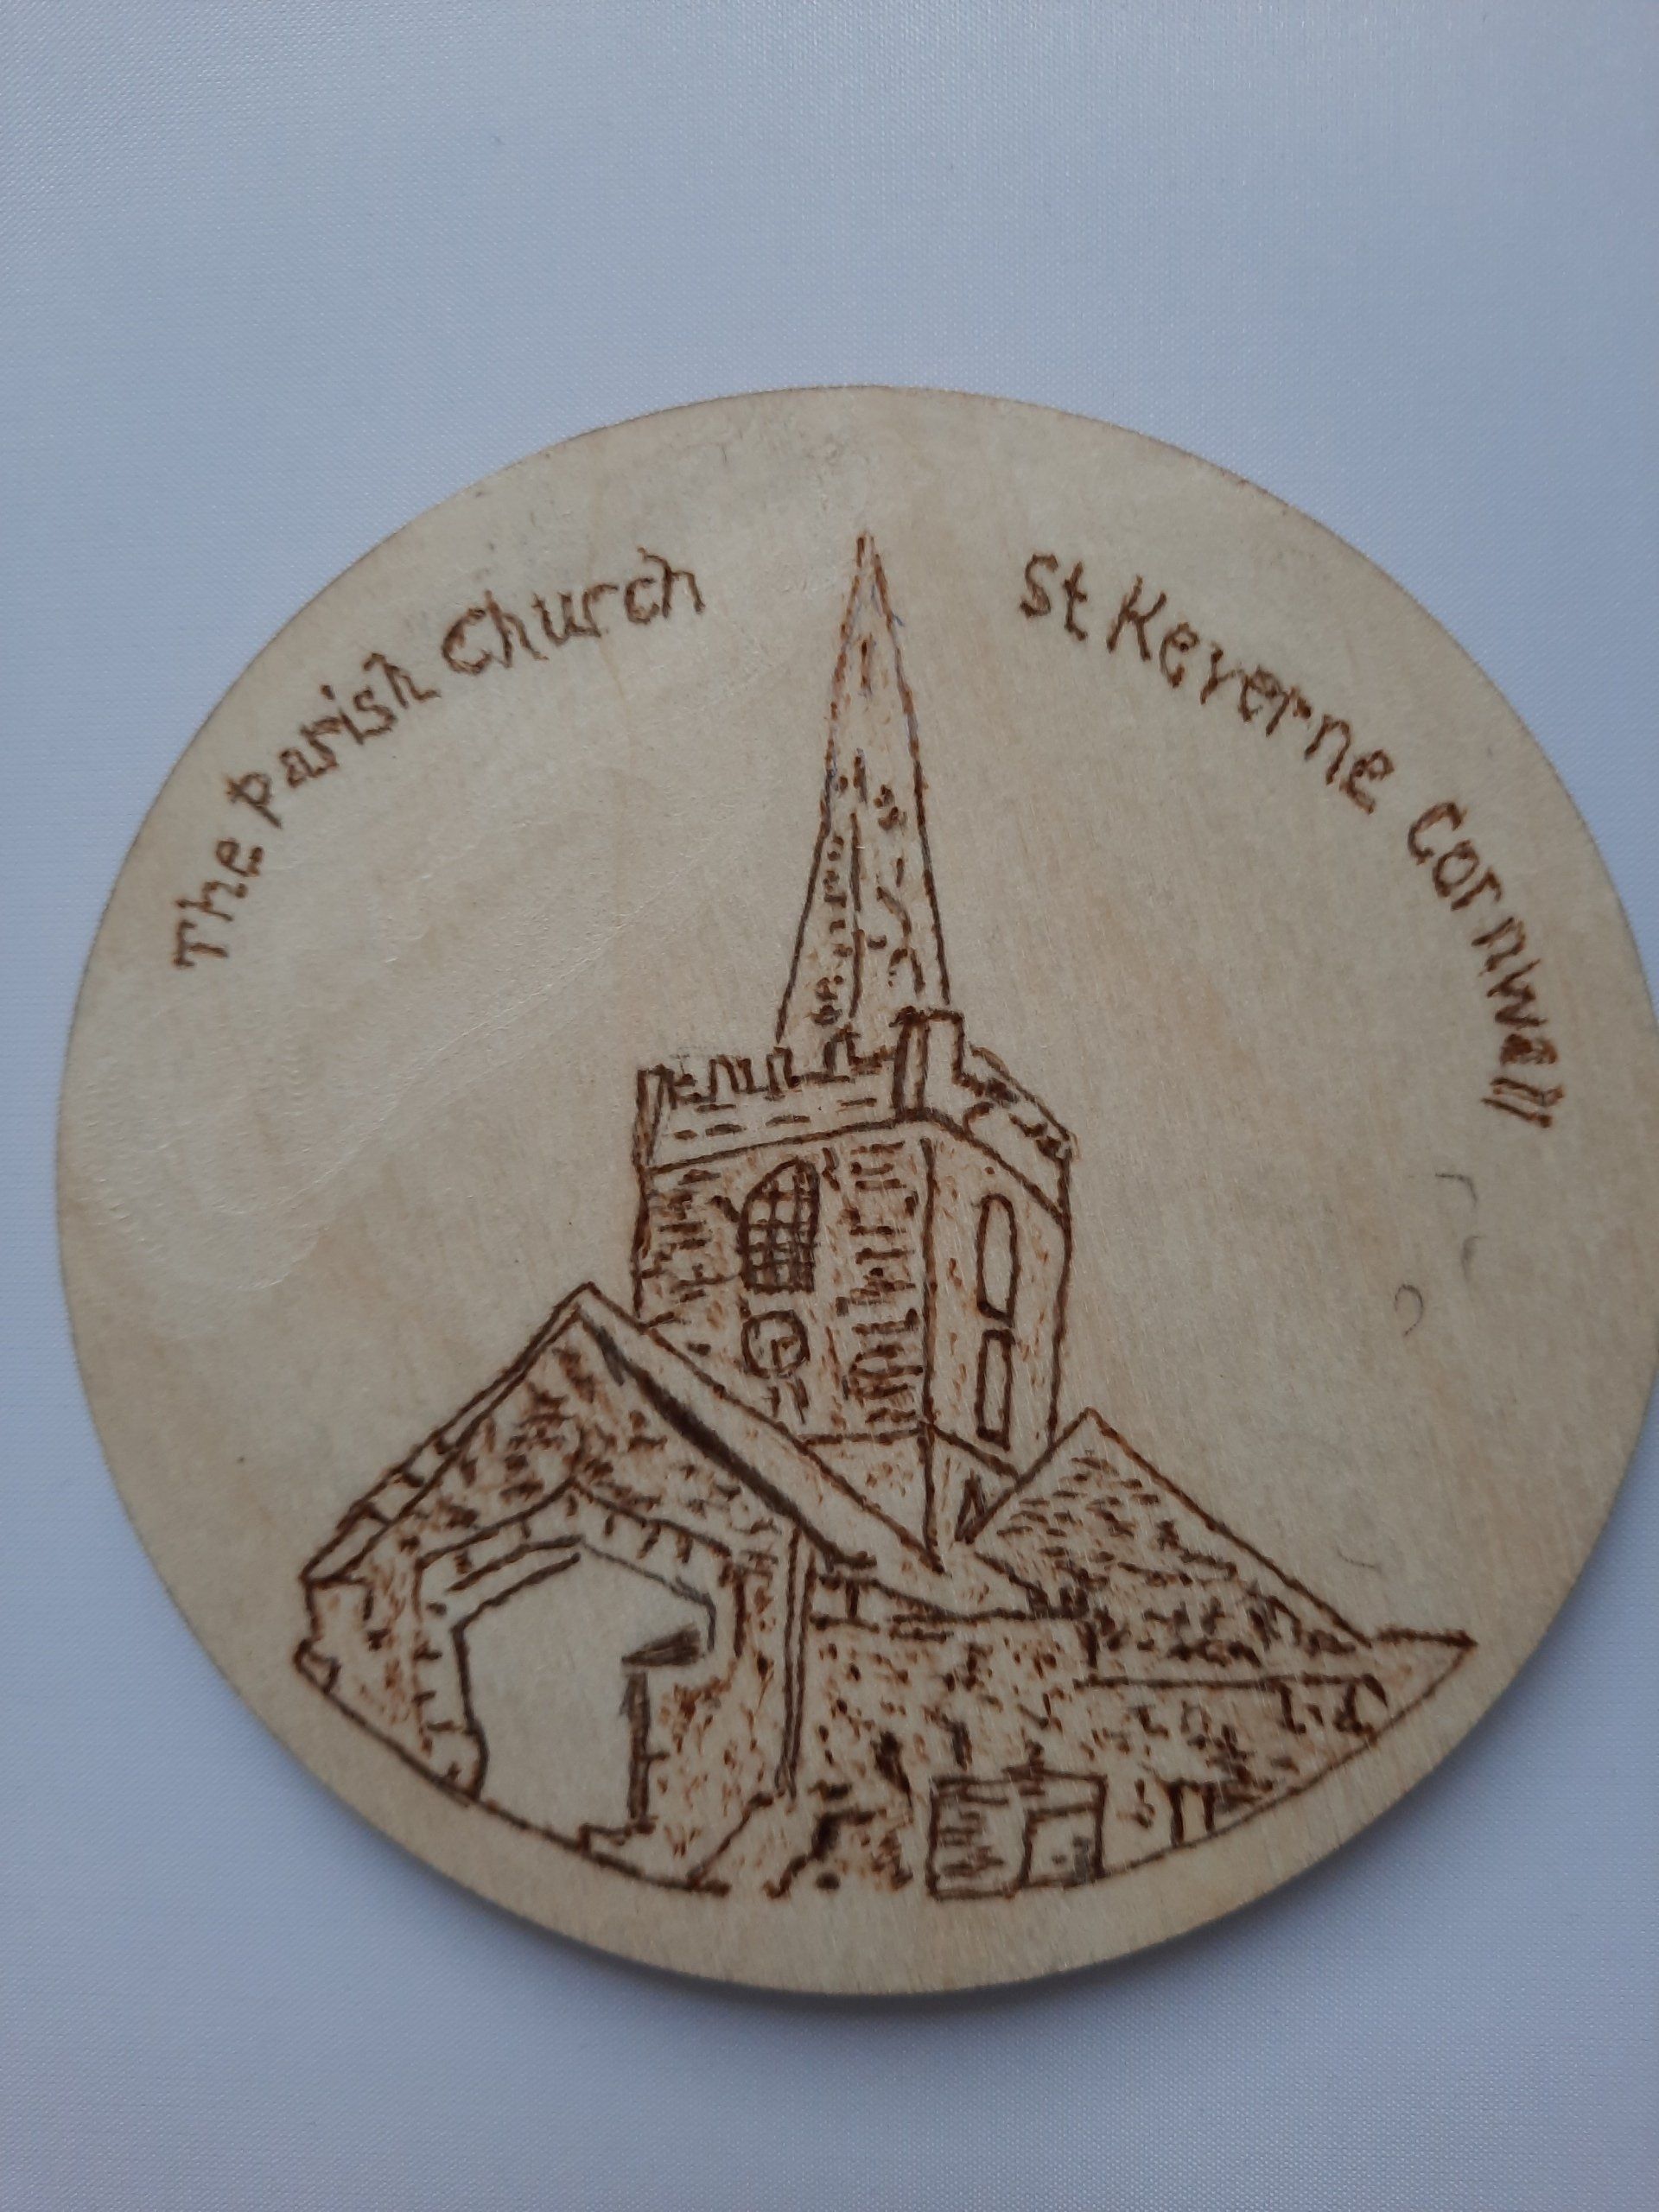 St Keverne, Cornwall, coaster, wood, pyrography